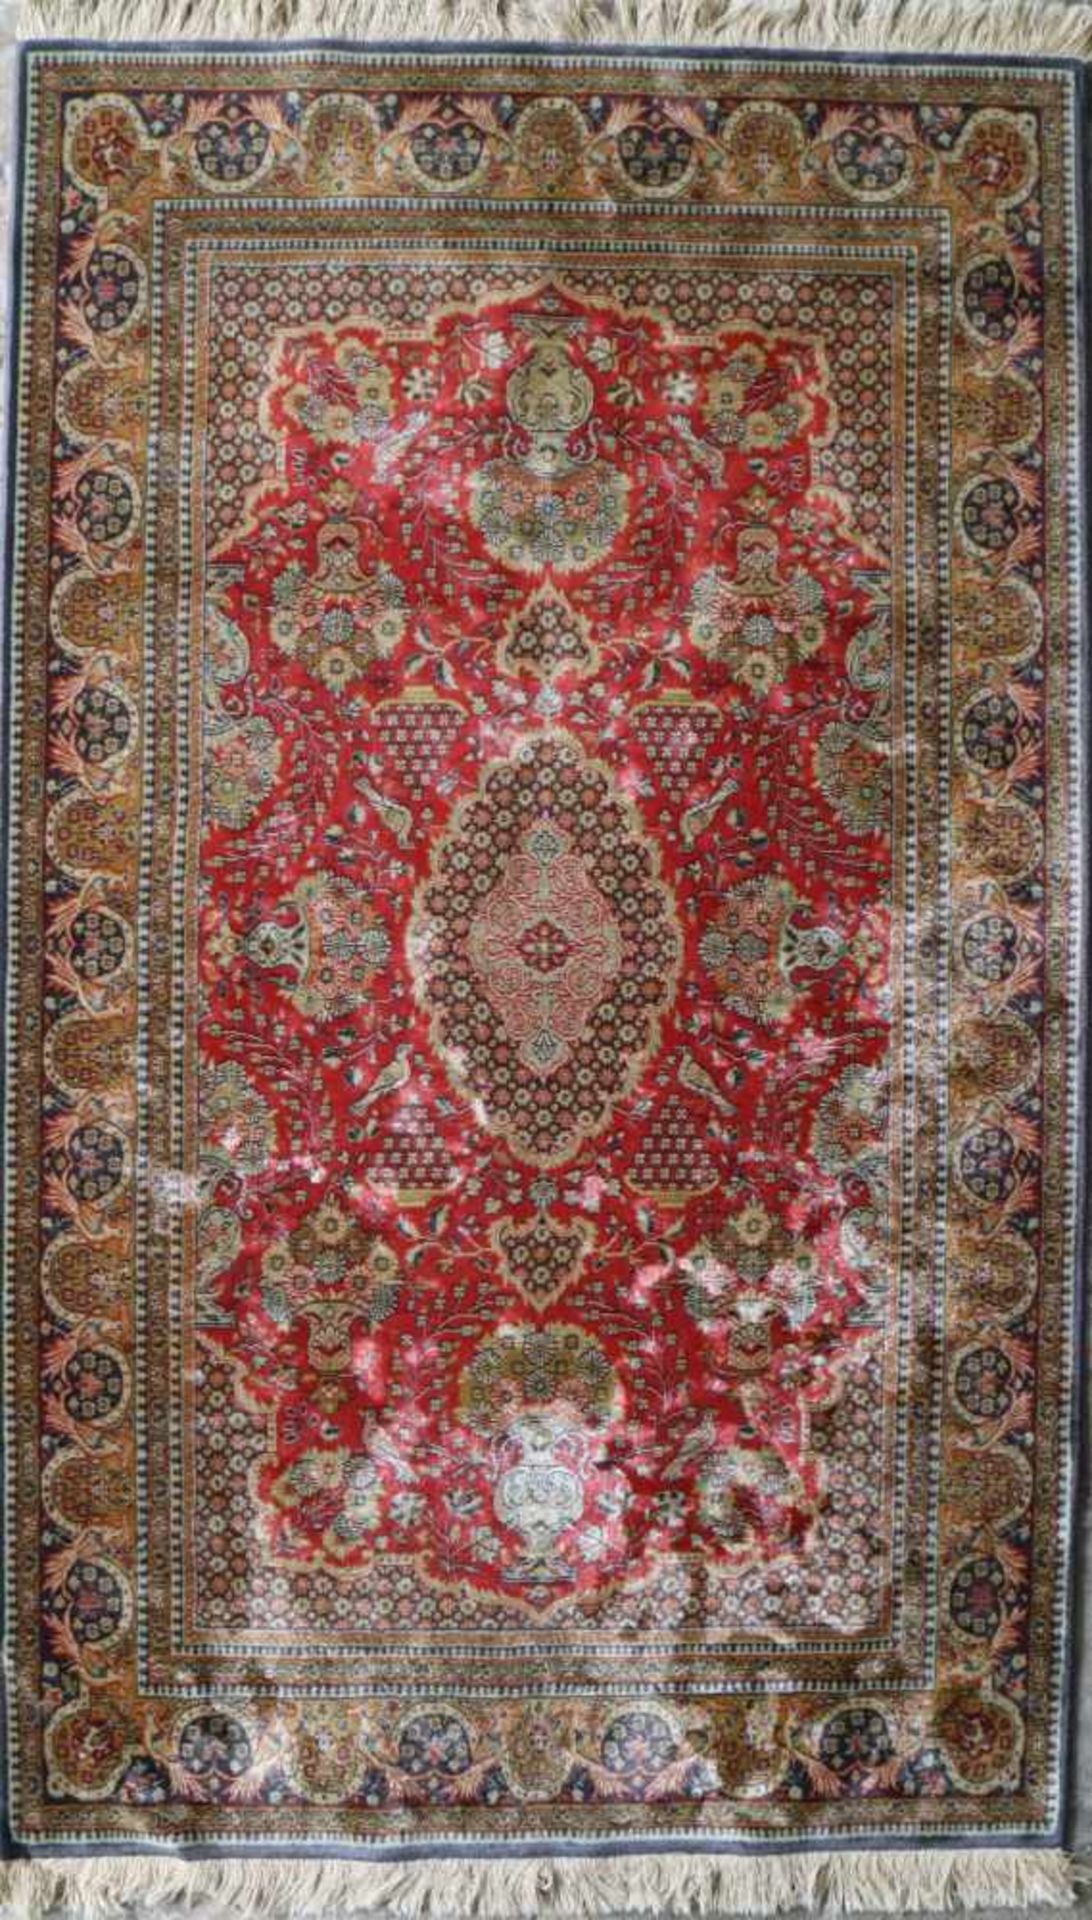 Oriental carpet Oriental carpet 102 x 171 cm